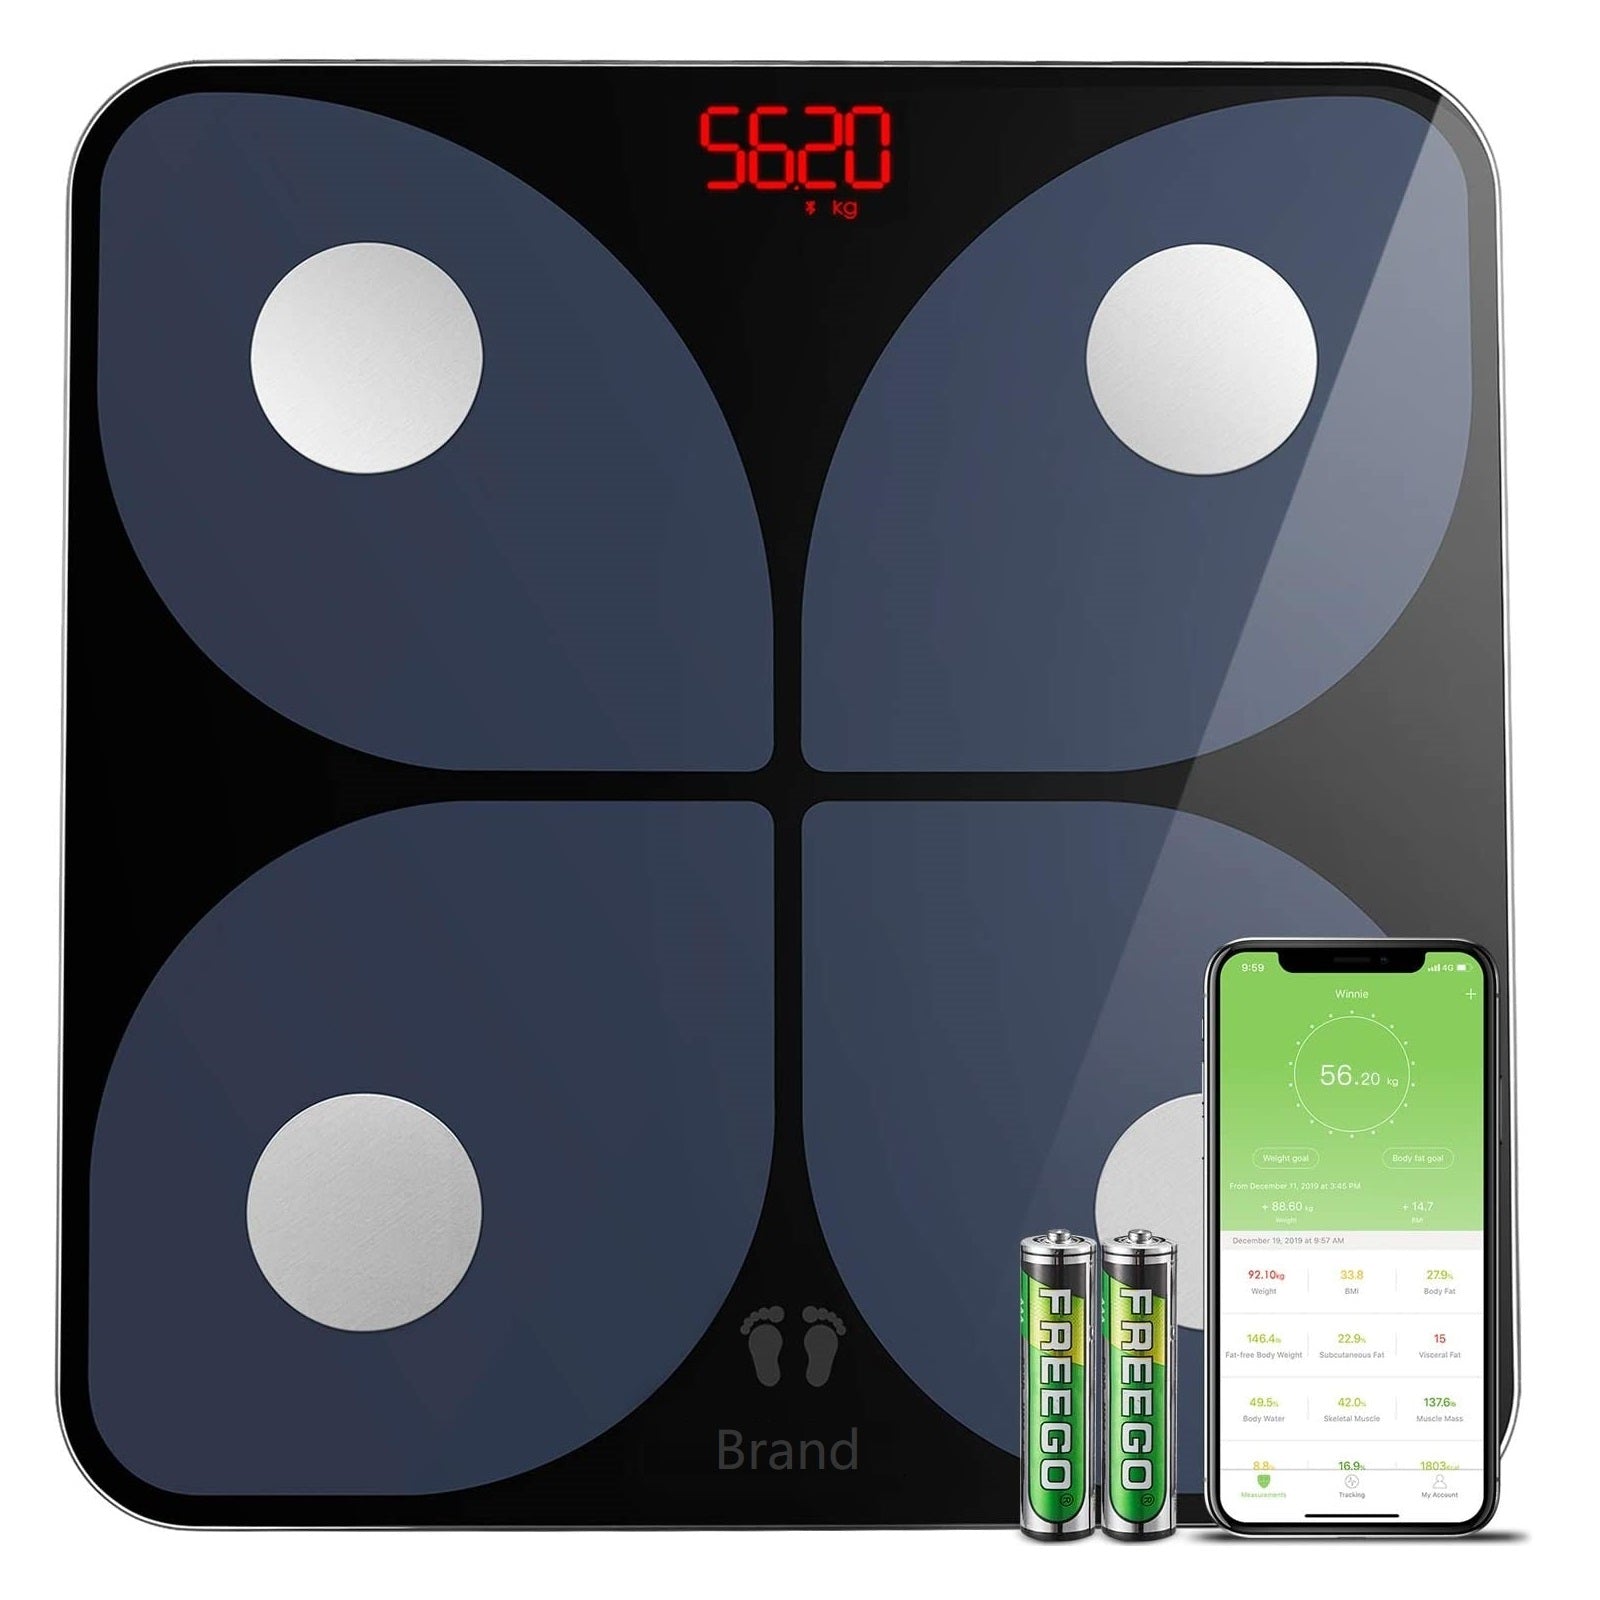 Wellue Smart Body Fat Scale - Black for sale online